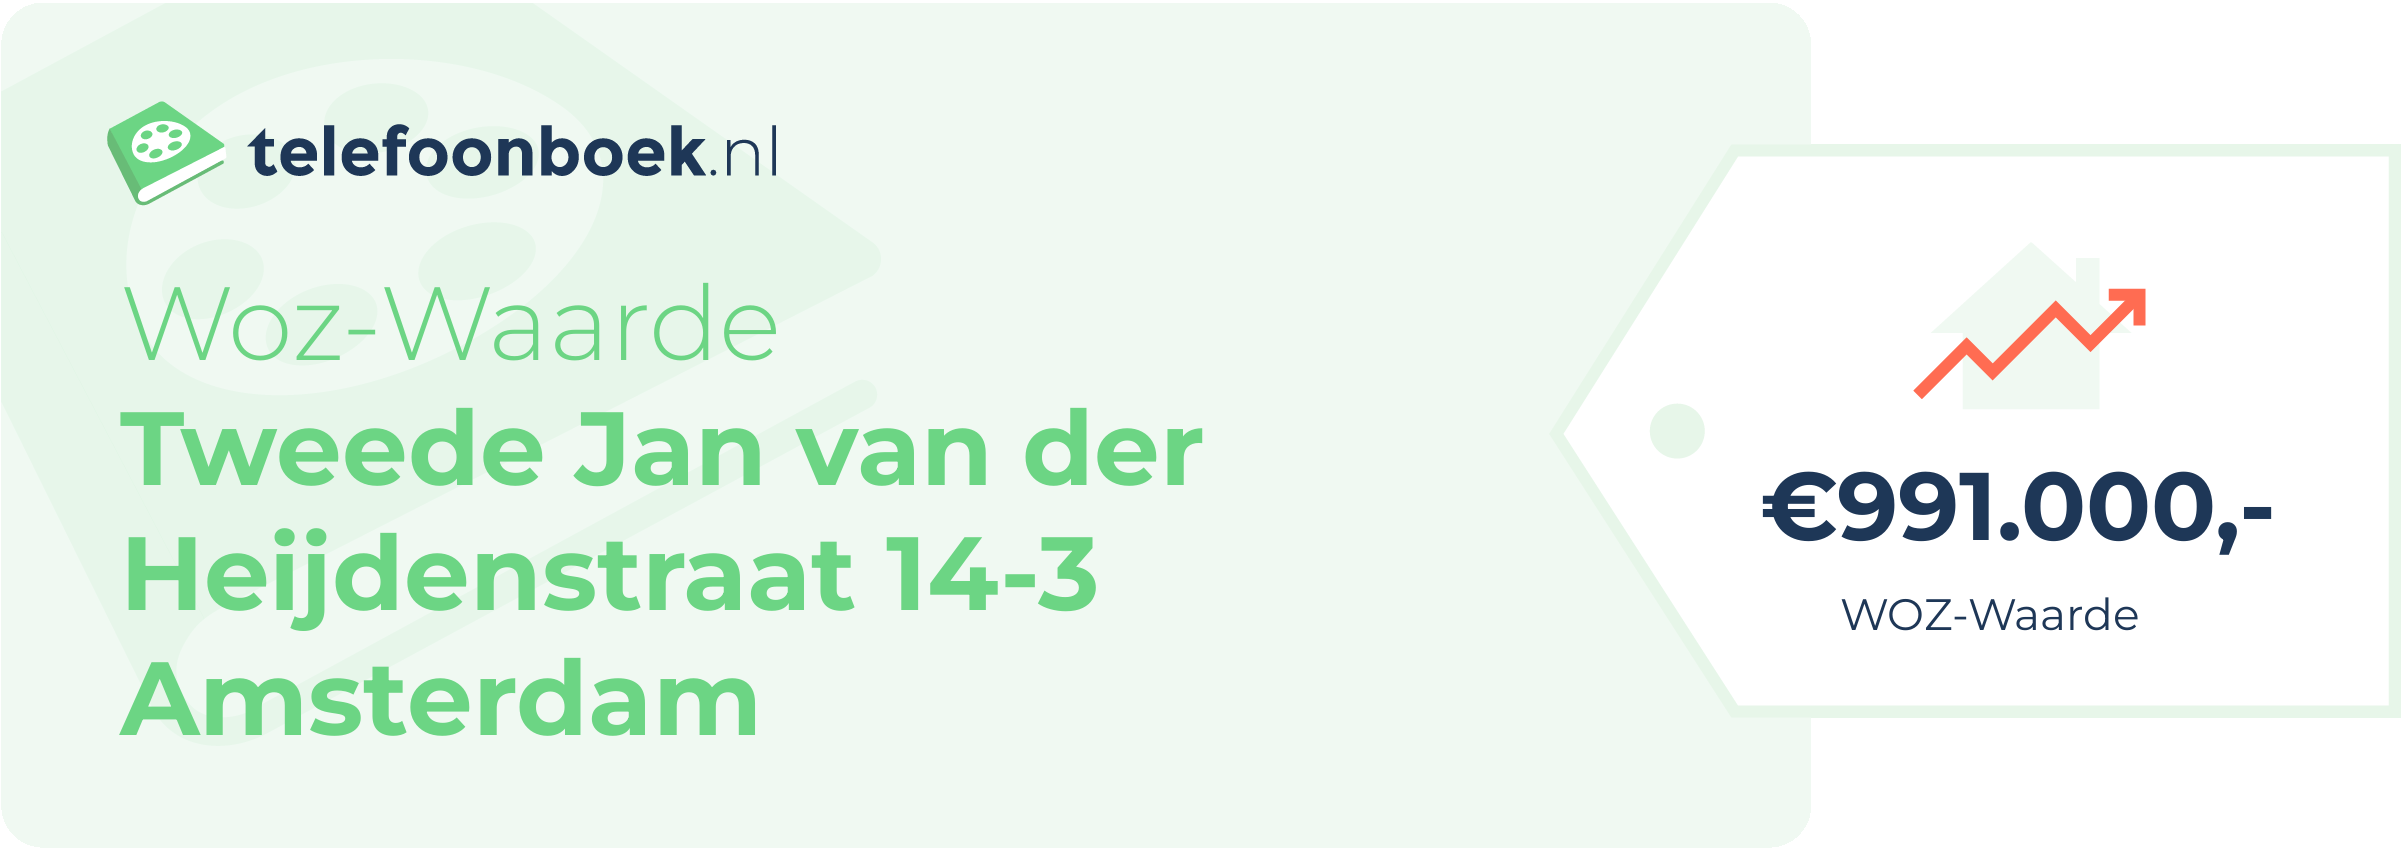 WOZ-waarde Tweede Jan Van Der Heijdenstraat 14-3 Amsterdam